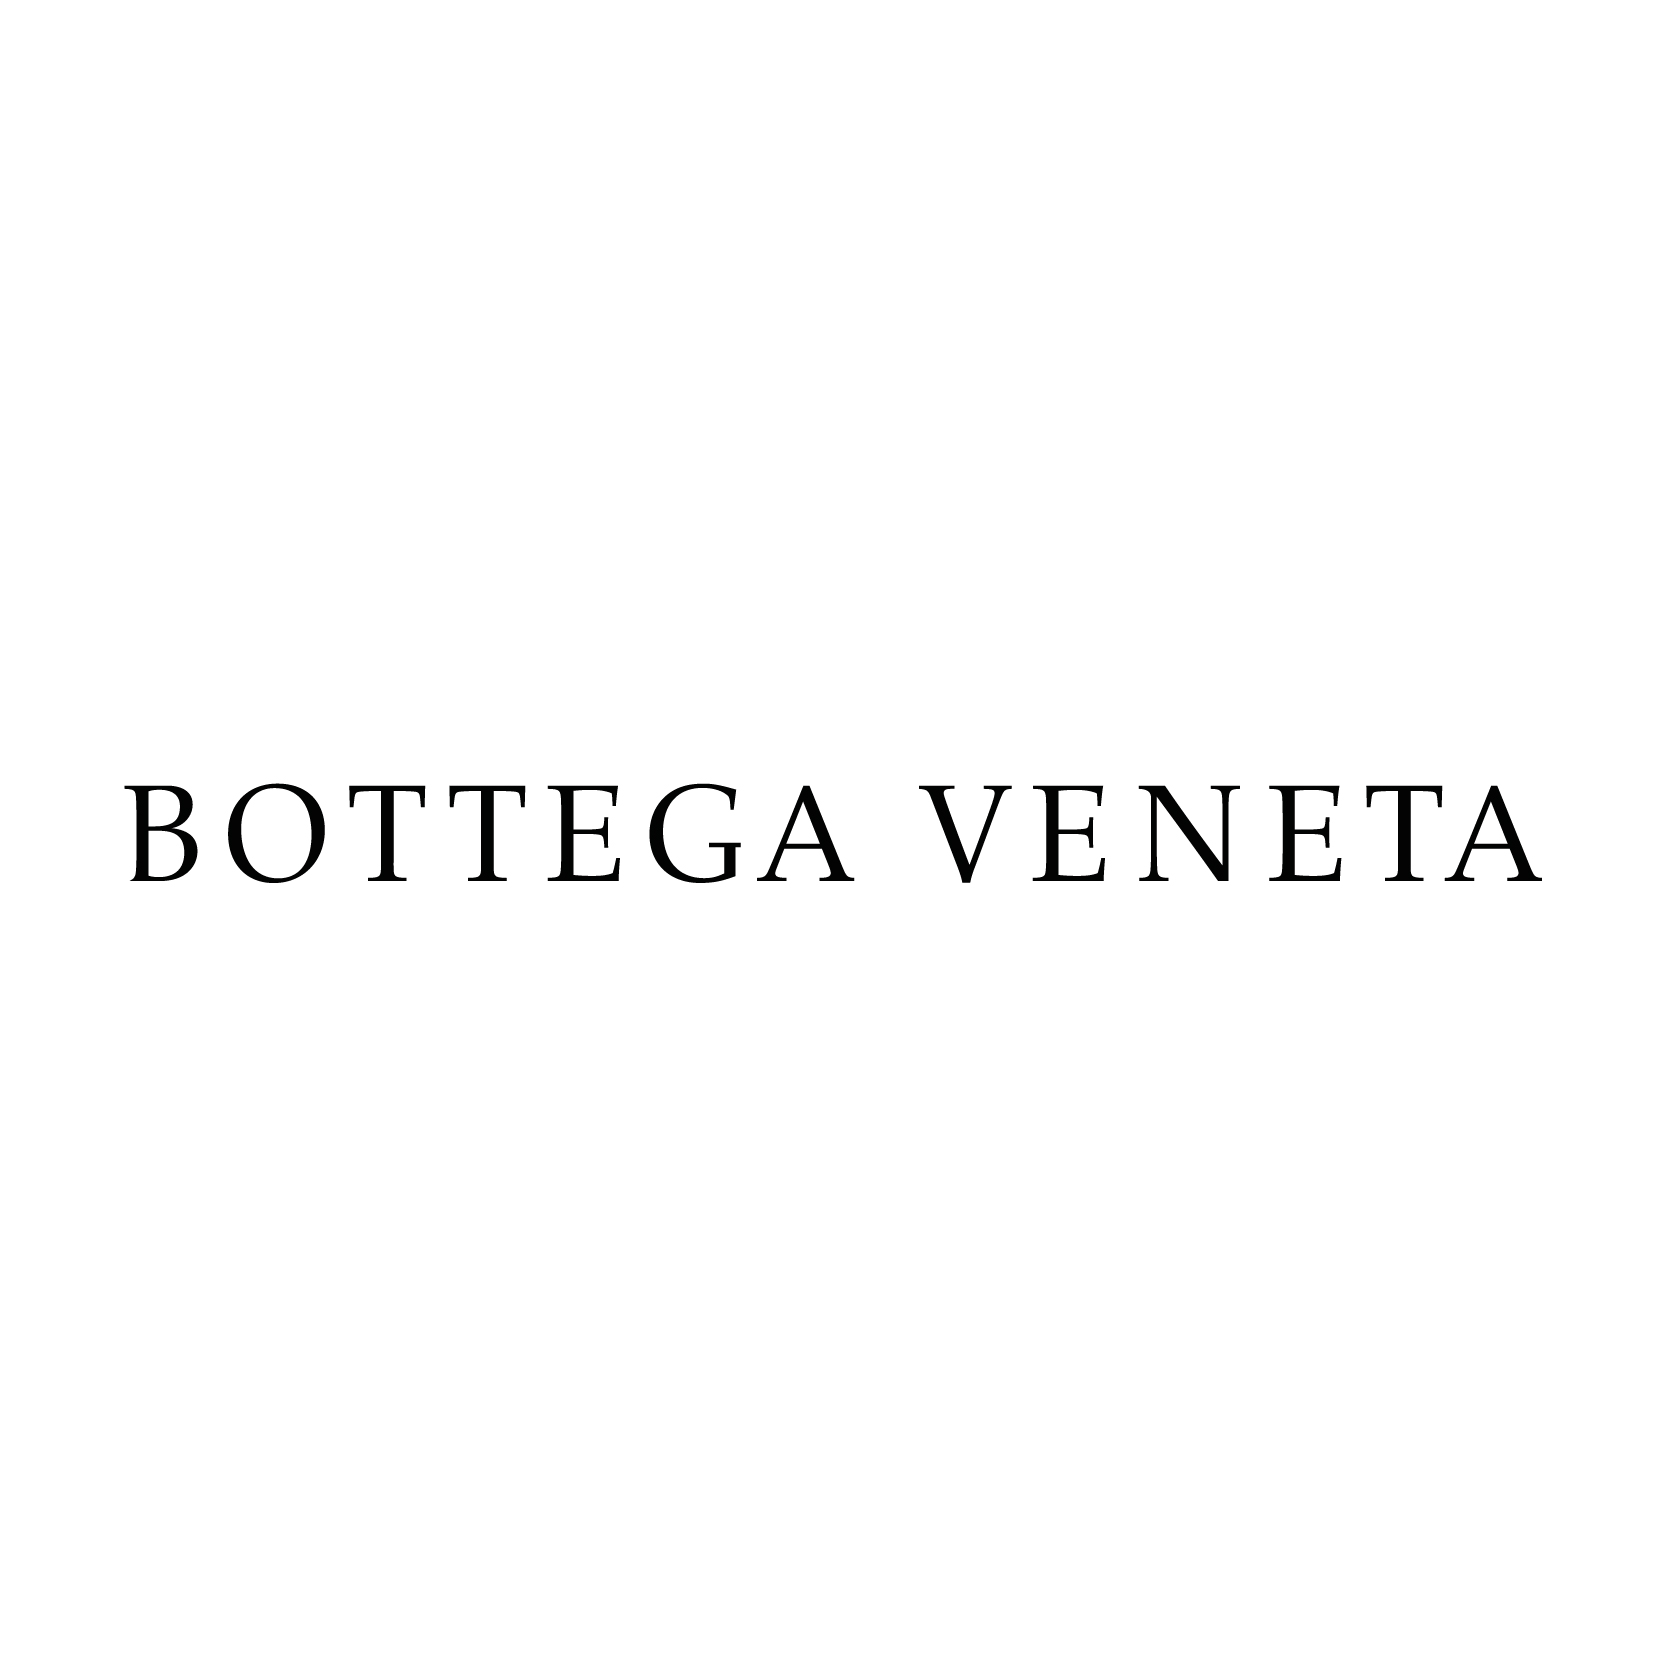 Bottega Veneta Logo - File:Bottega Veneta logo 3.png - Wikimedia Commons